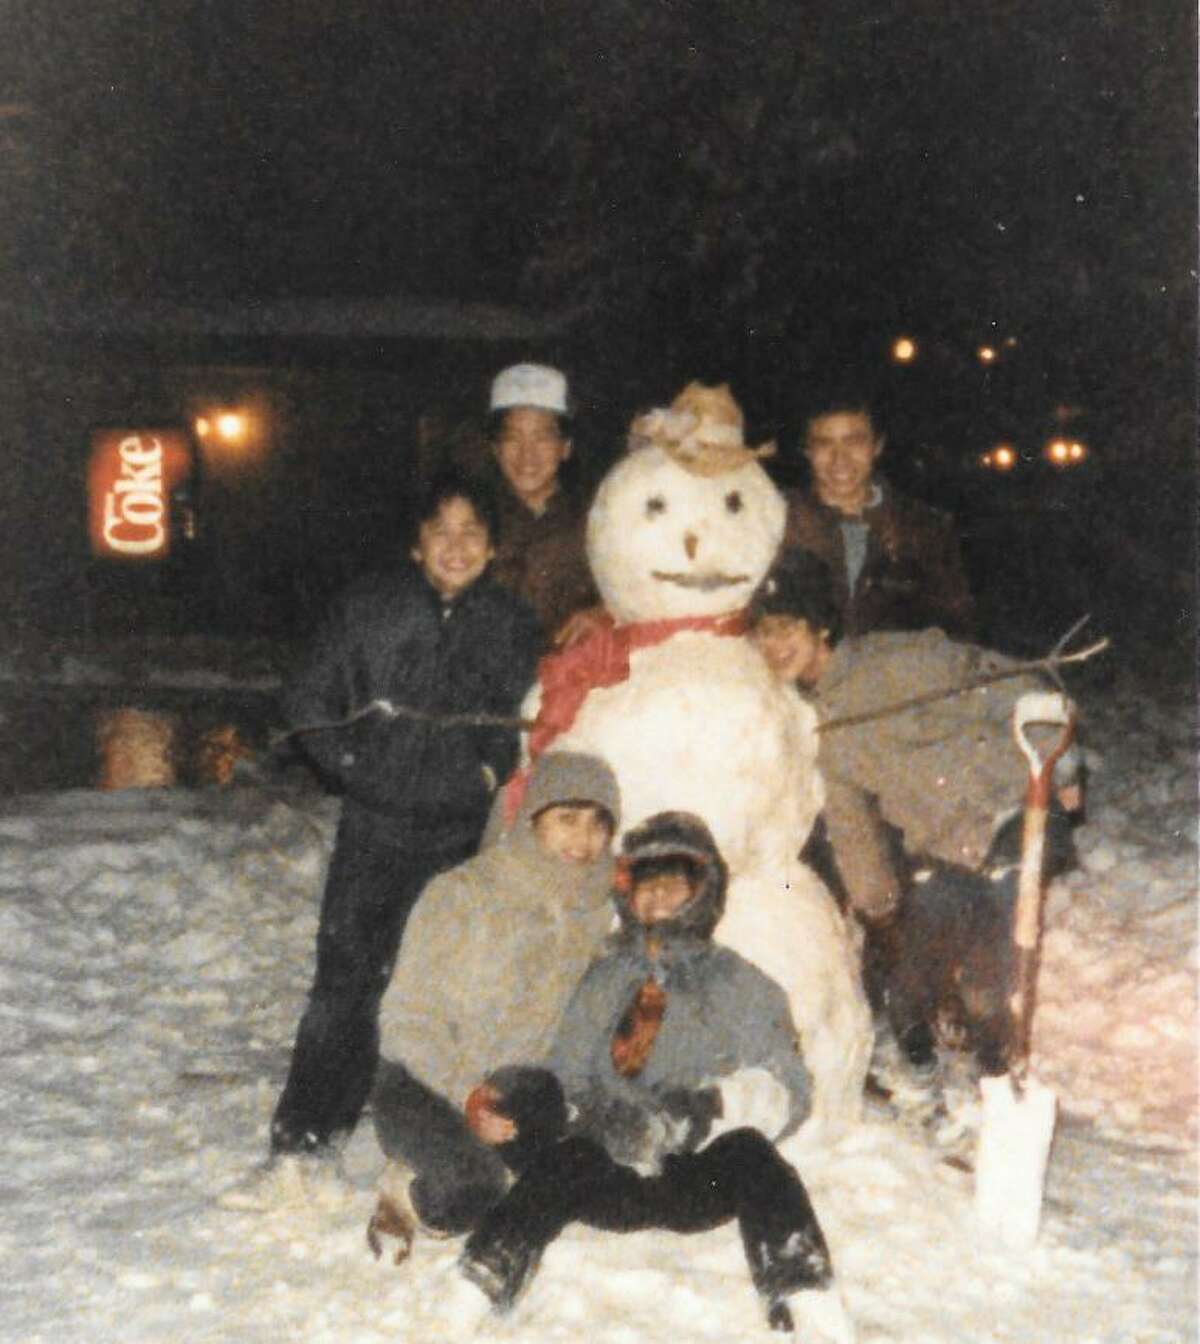 Readers remember San Antonio’s historic snowfall from January 1985.